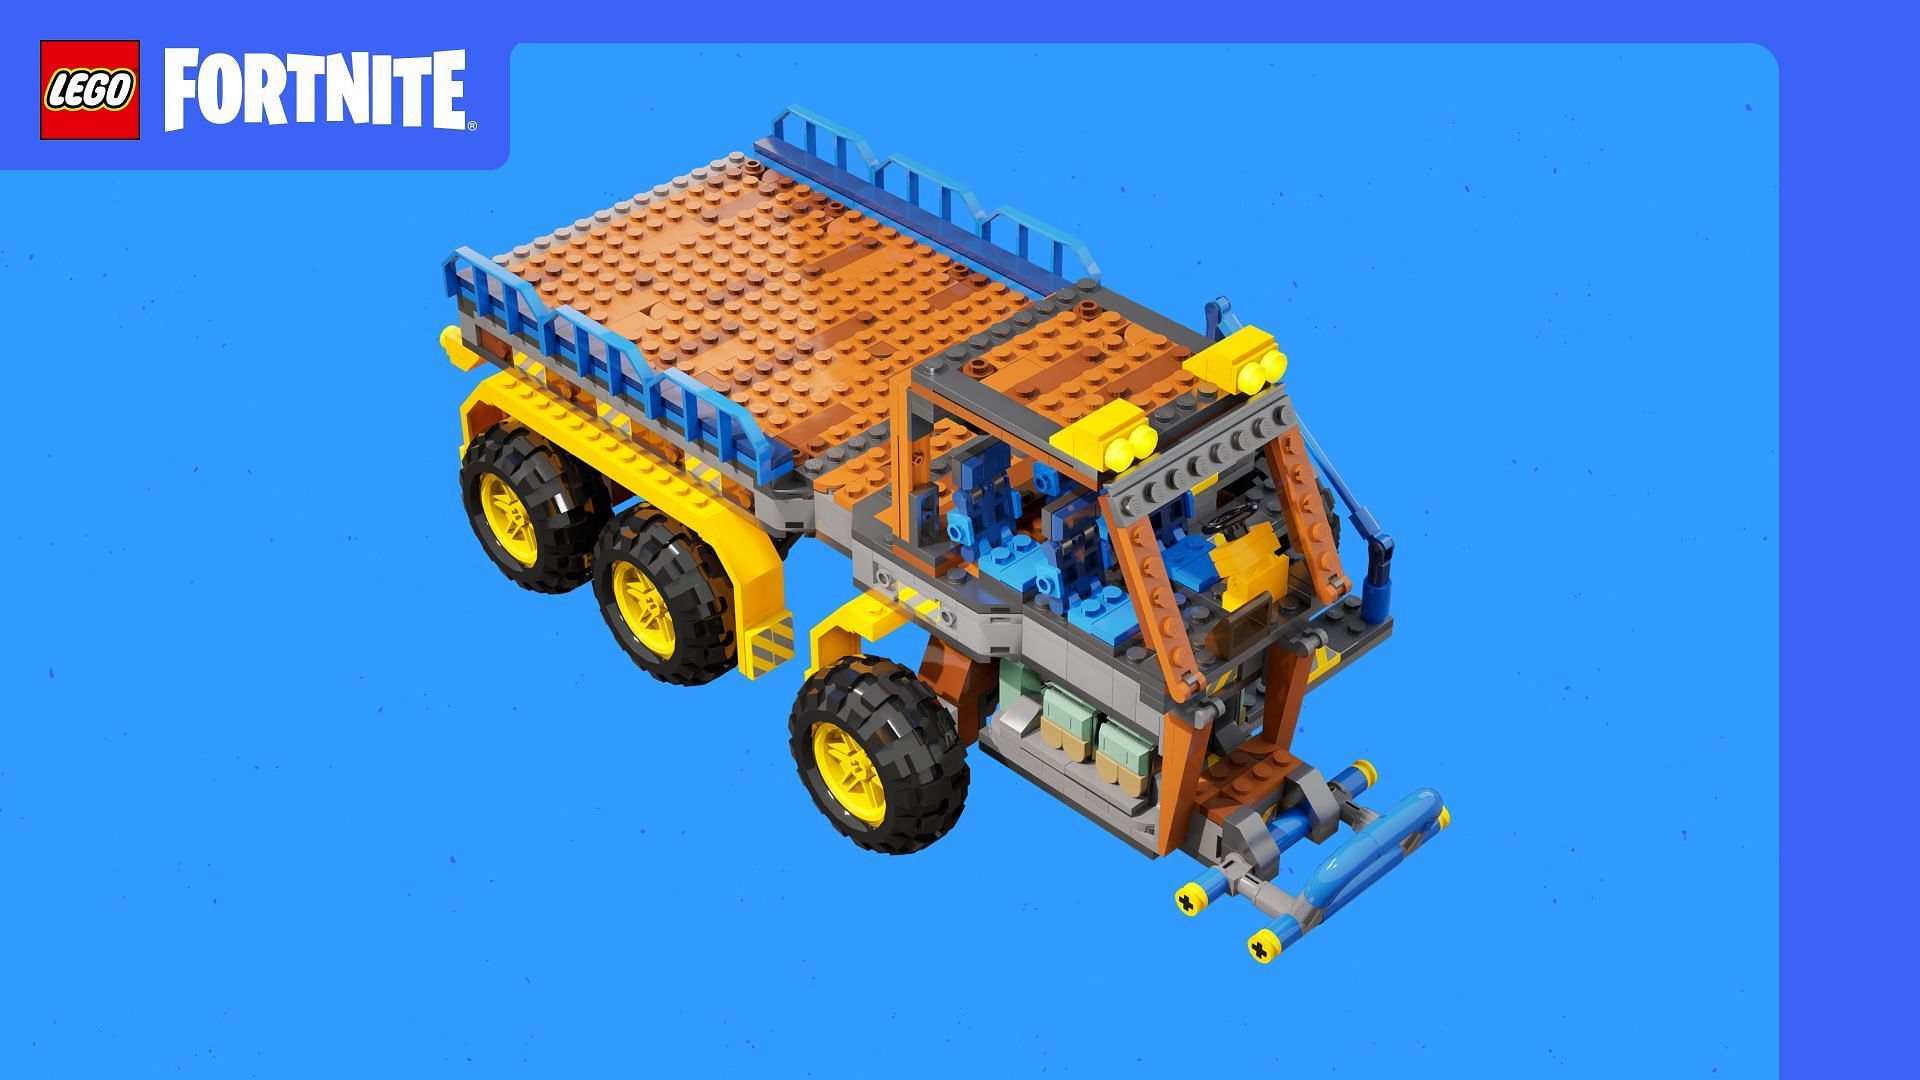 Hauler is good for hauling around cargo (Image via Epic Games/LEGO Fortnite)